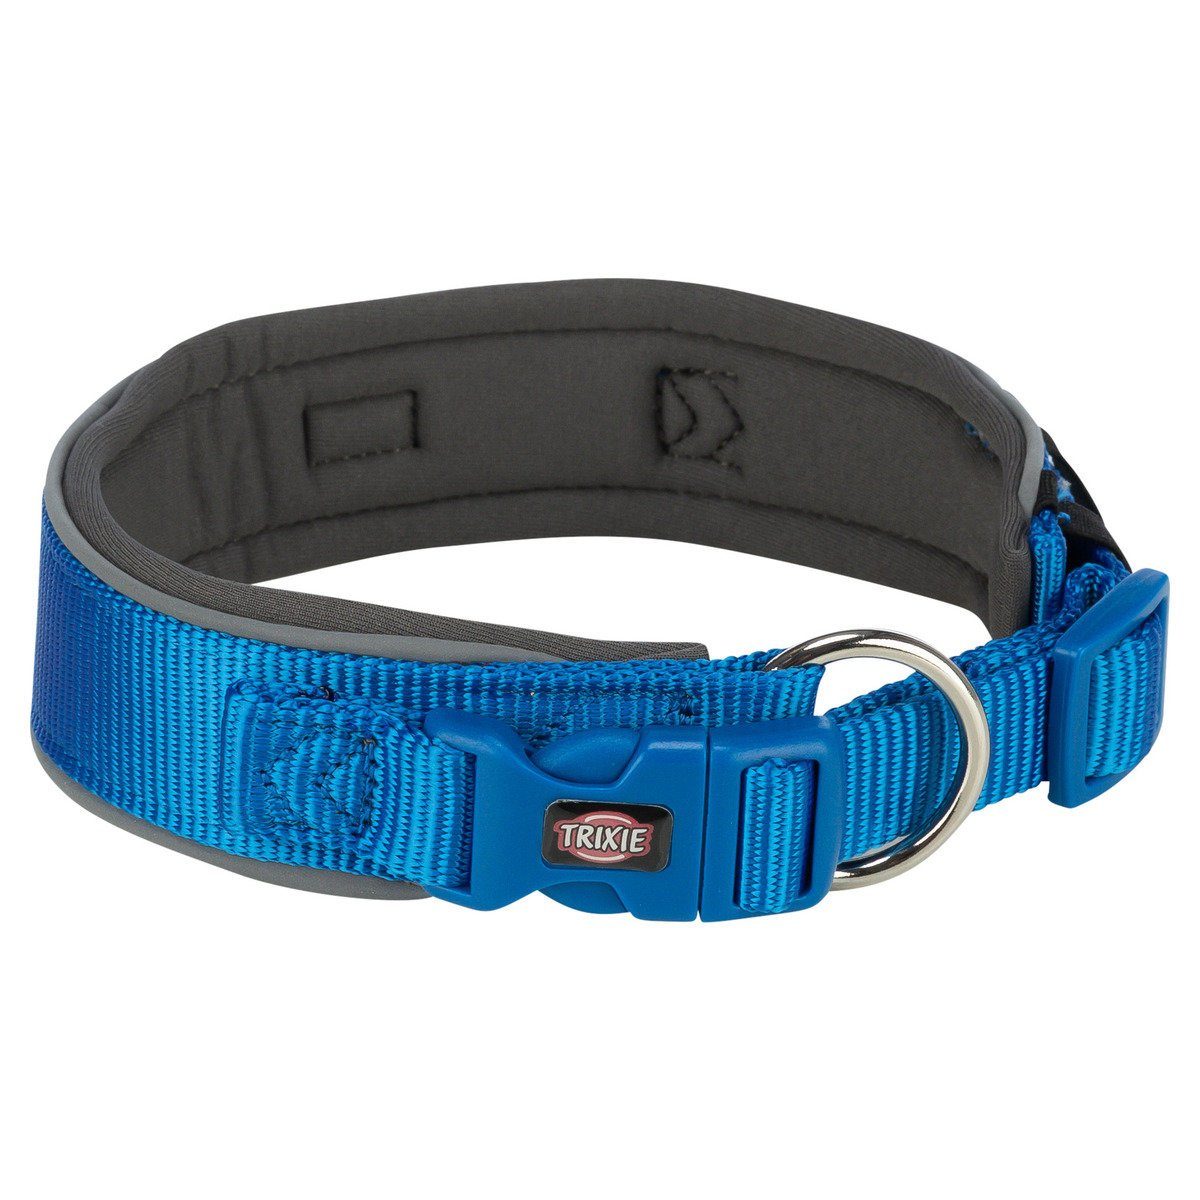 TRIXIE Hunde-Halsband Premium Halsband, extra breit, royalblau/grafit